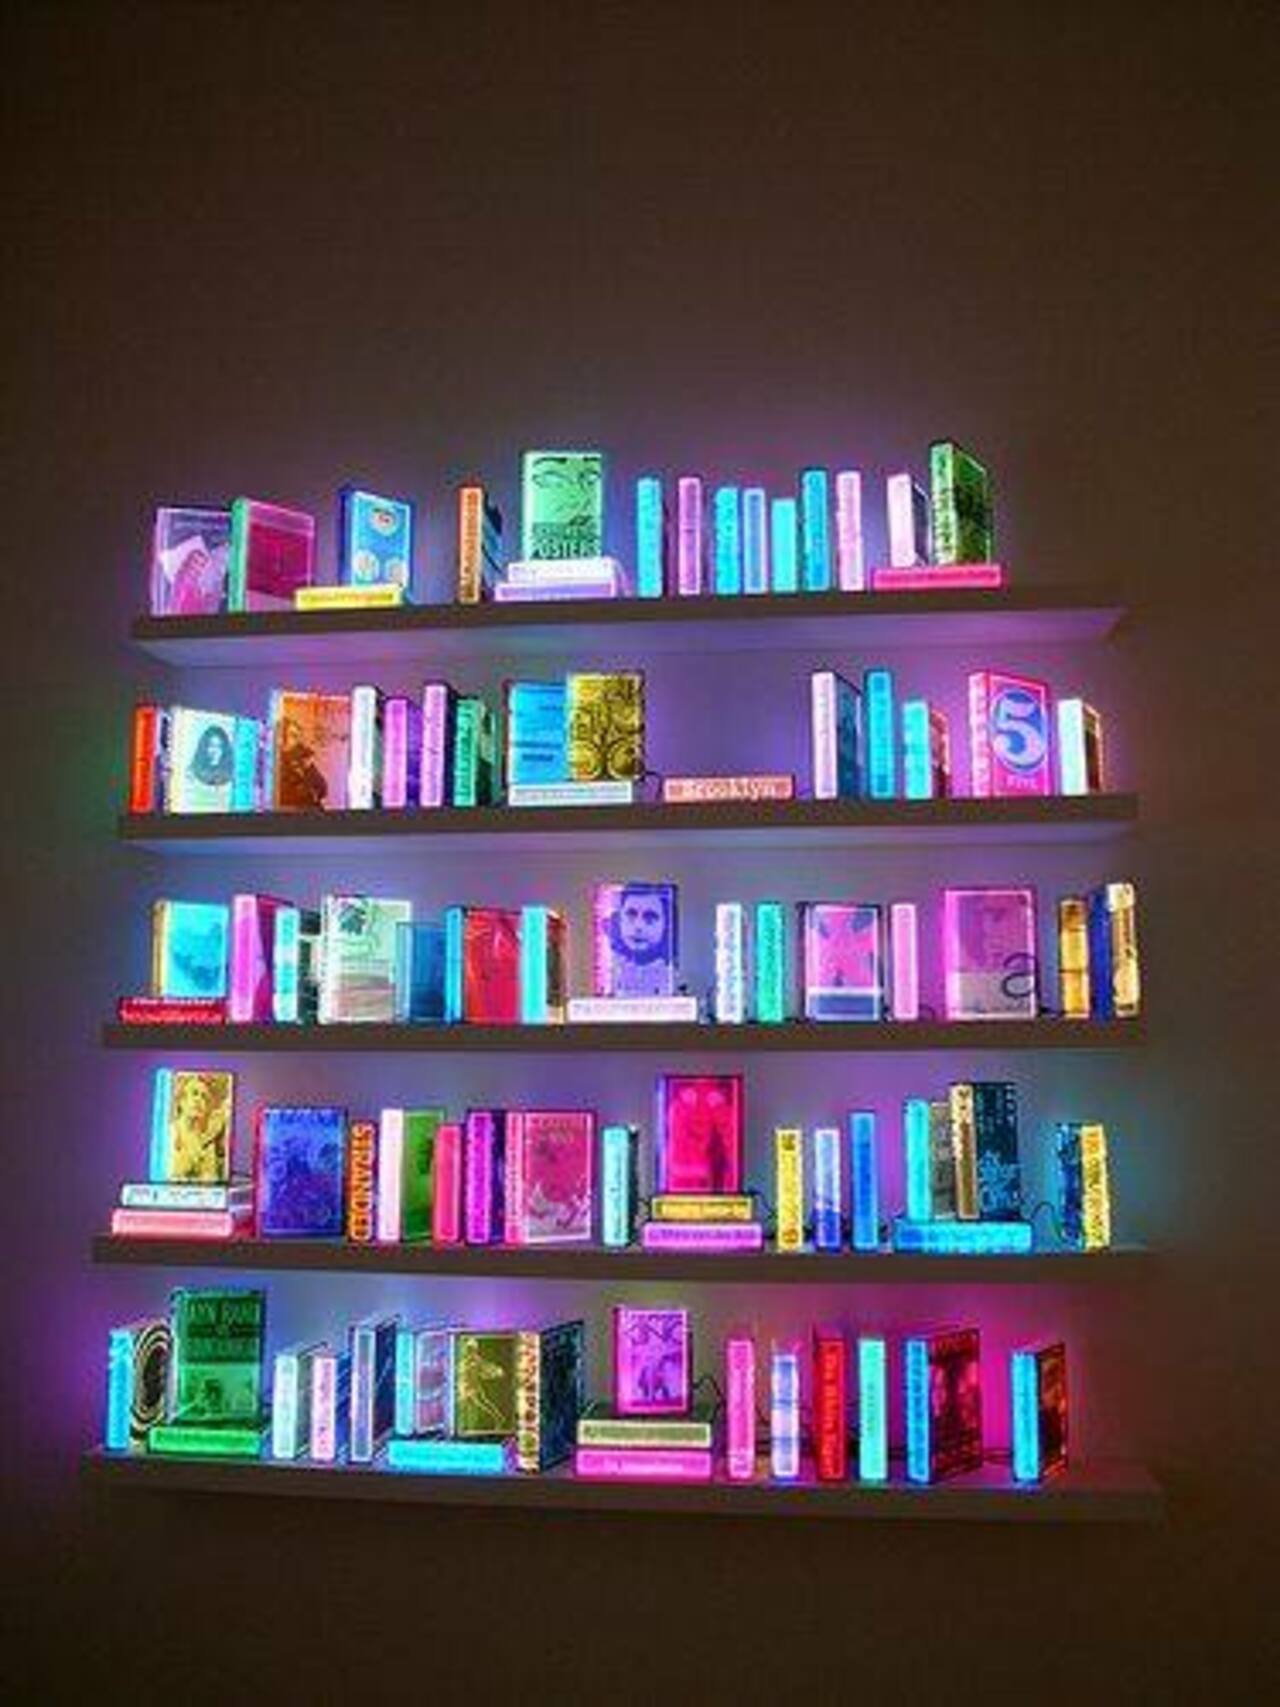 Neon book installation #art #urbanart #design #neonart #lightart #neon http://t.co/Im2vpQoTlM